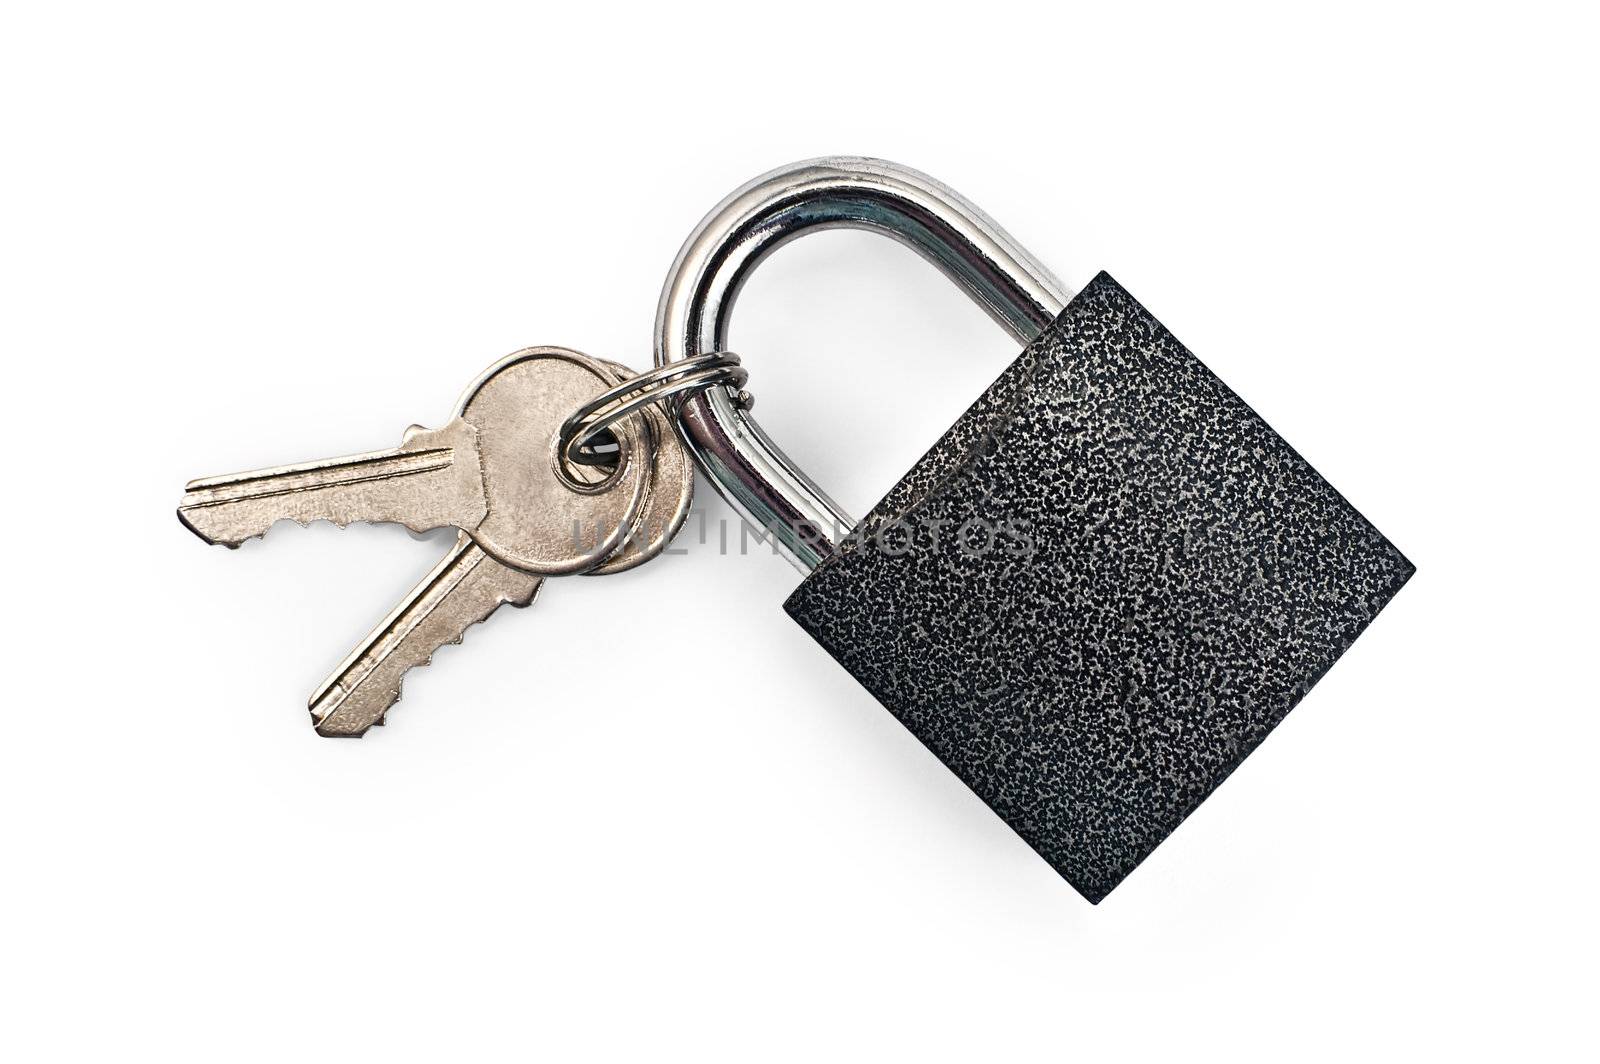 Black padlock with keys by rezkrr